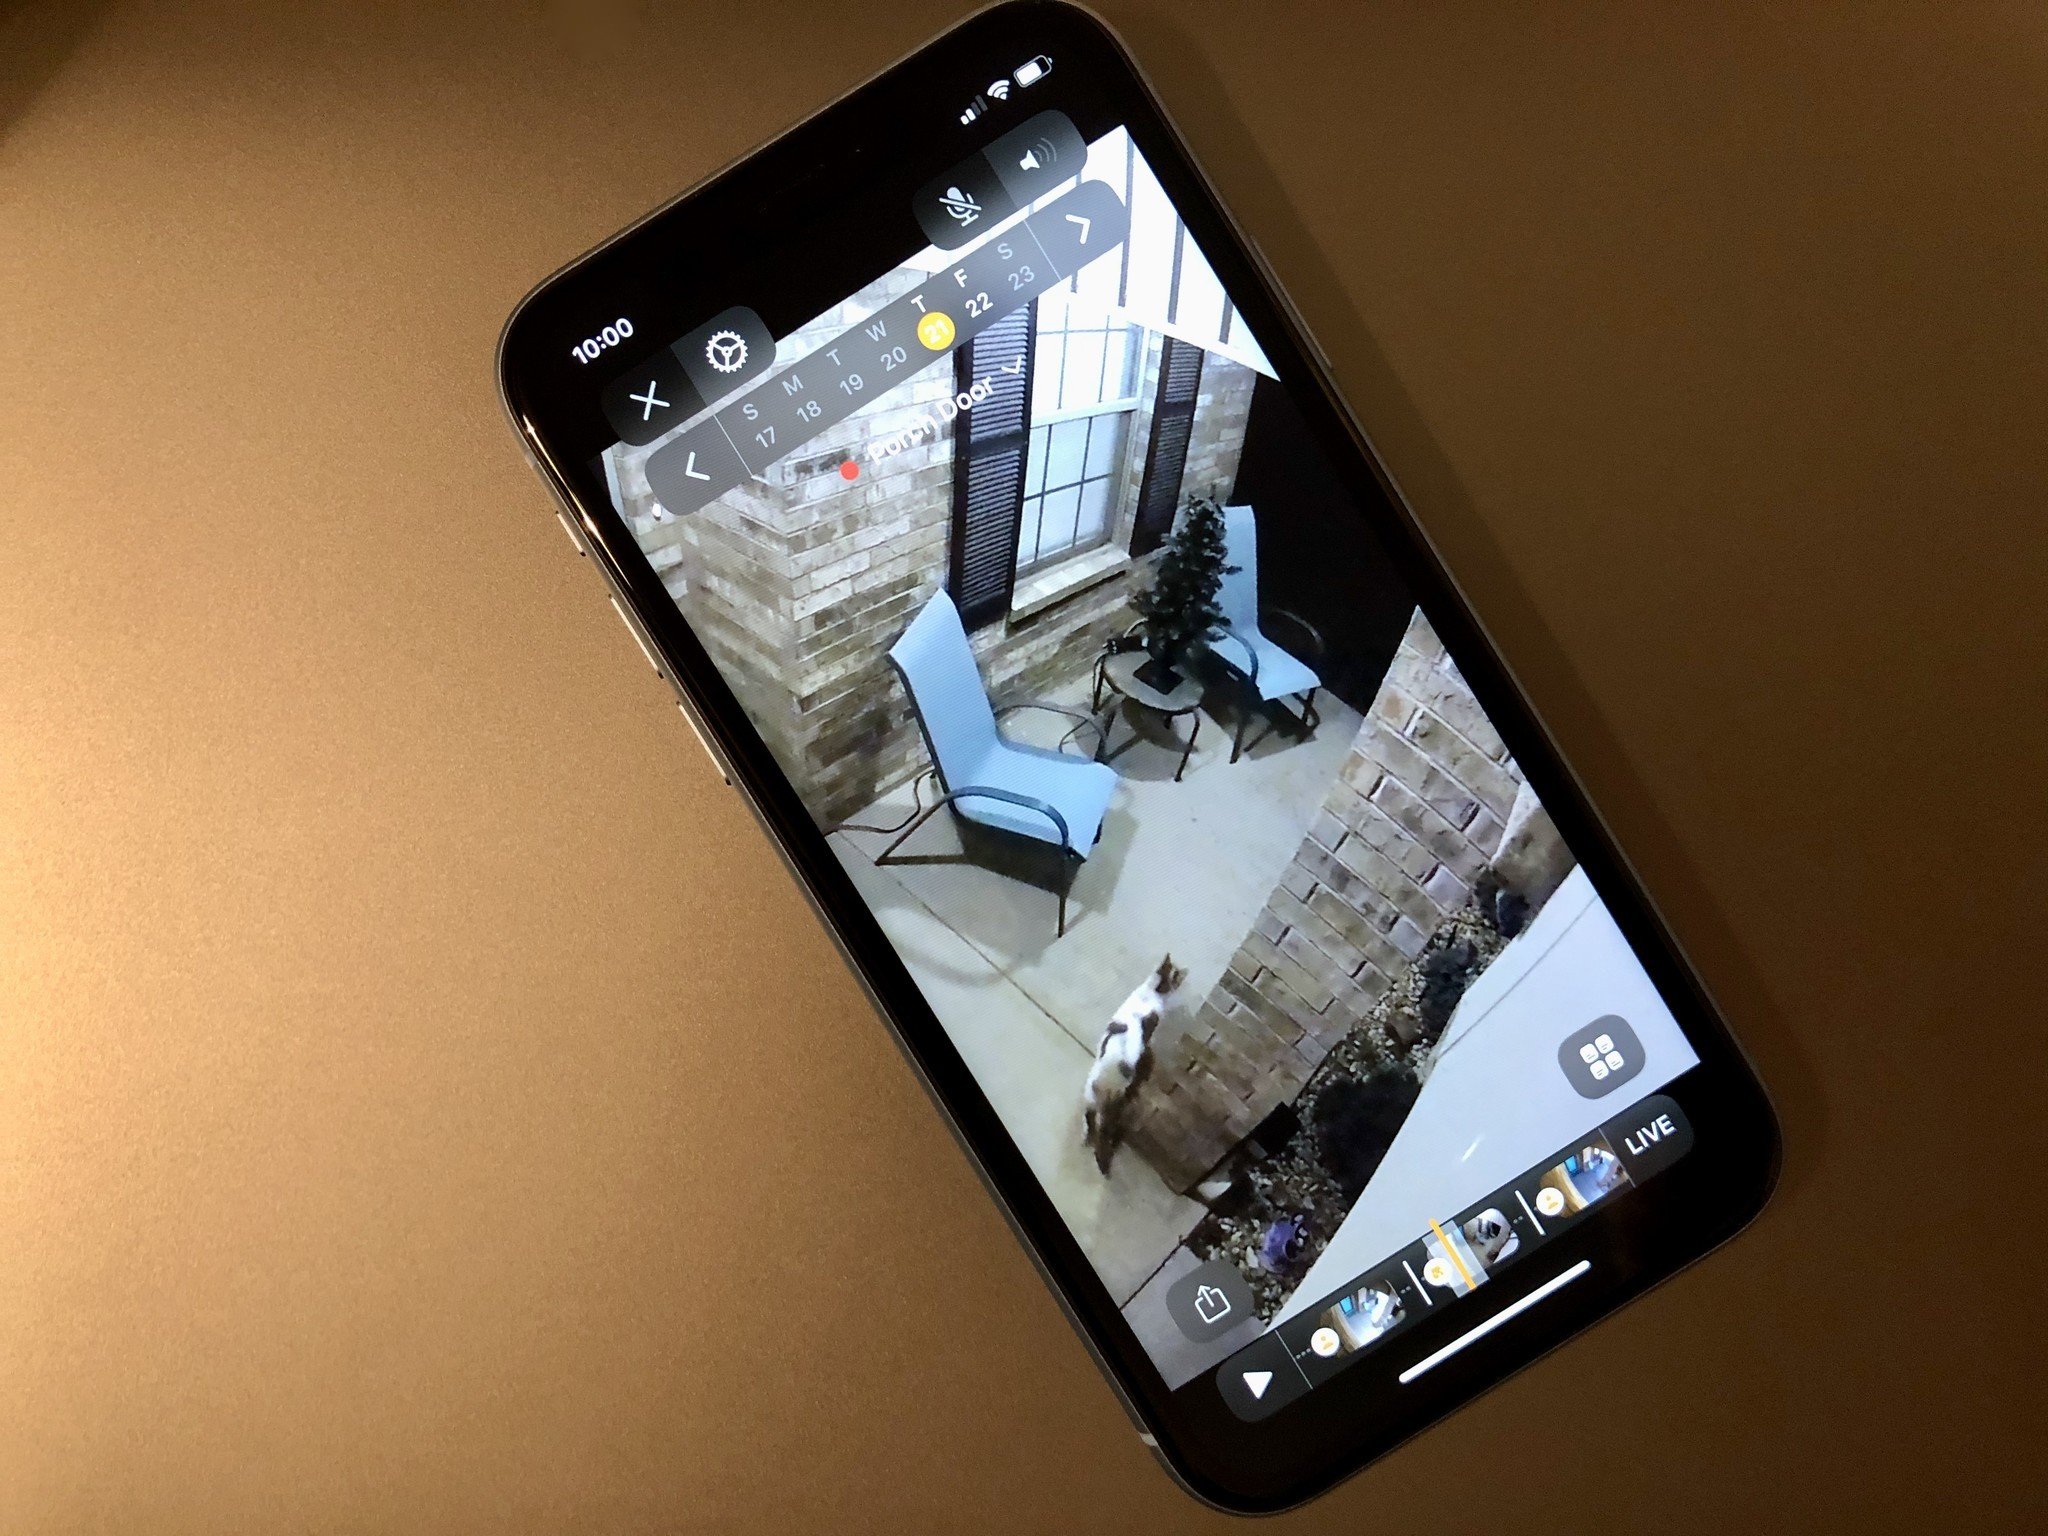 iPhone depicting HomeKit Secure Video recording